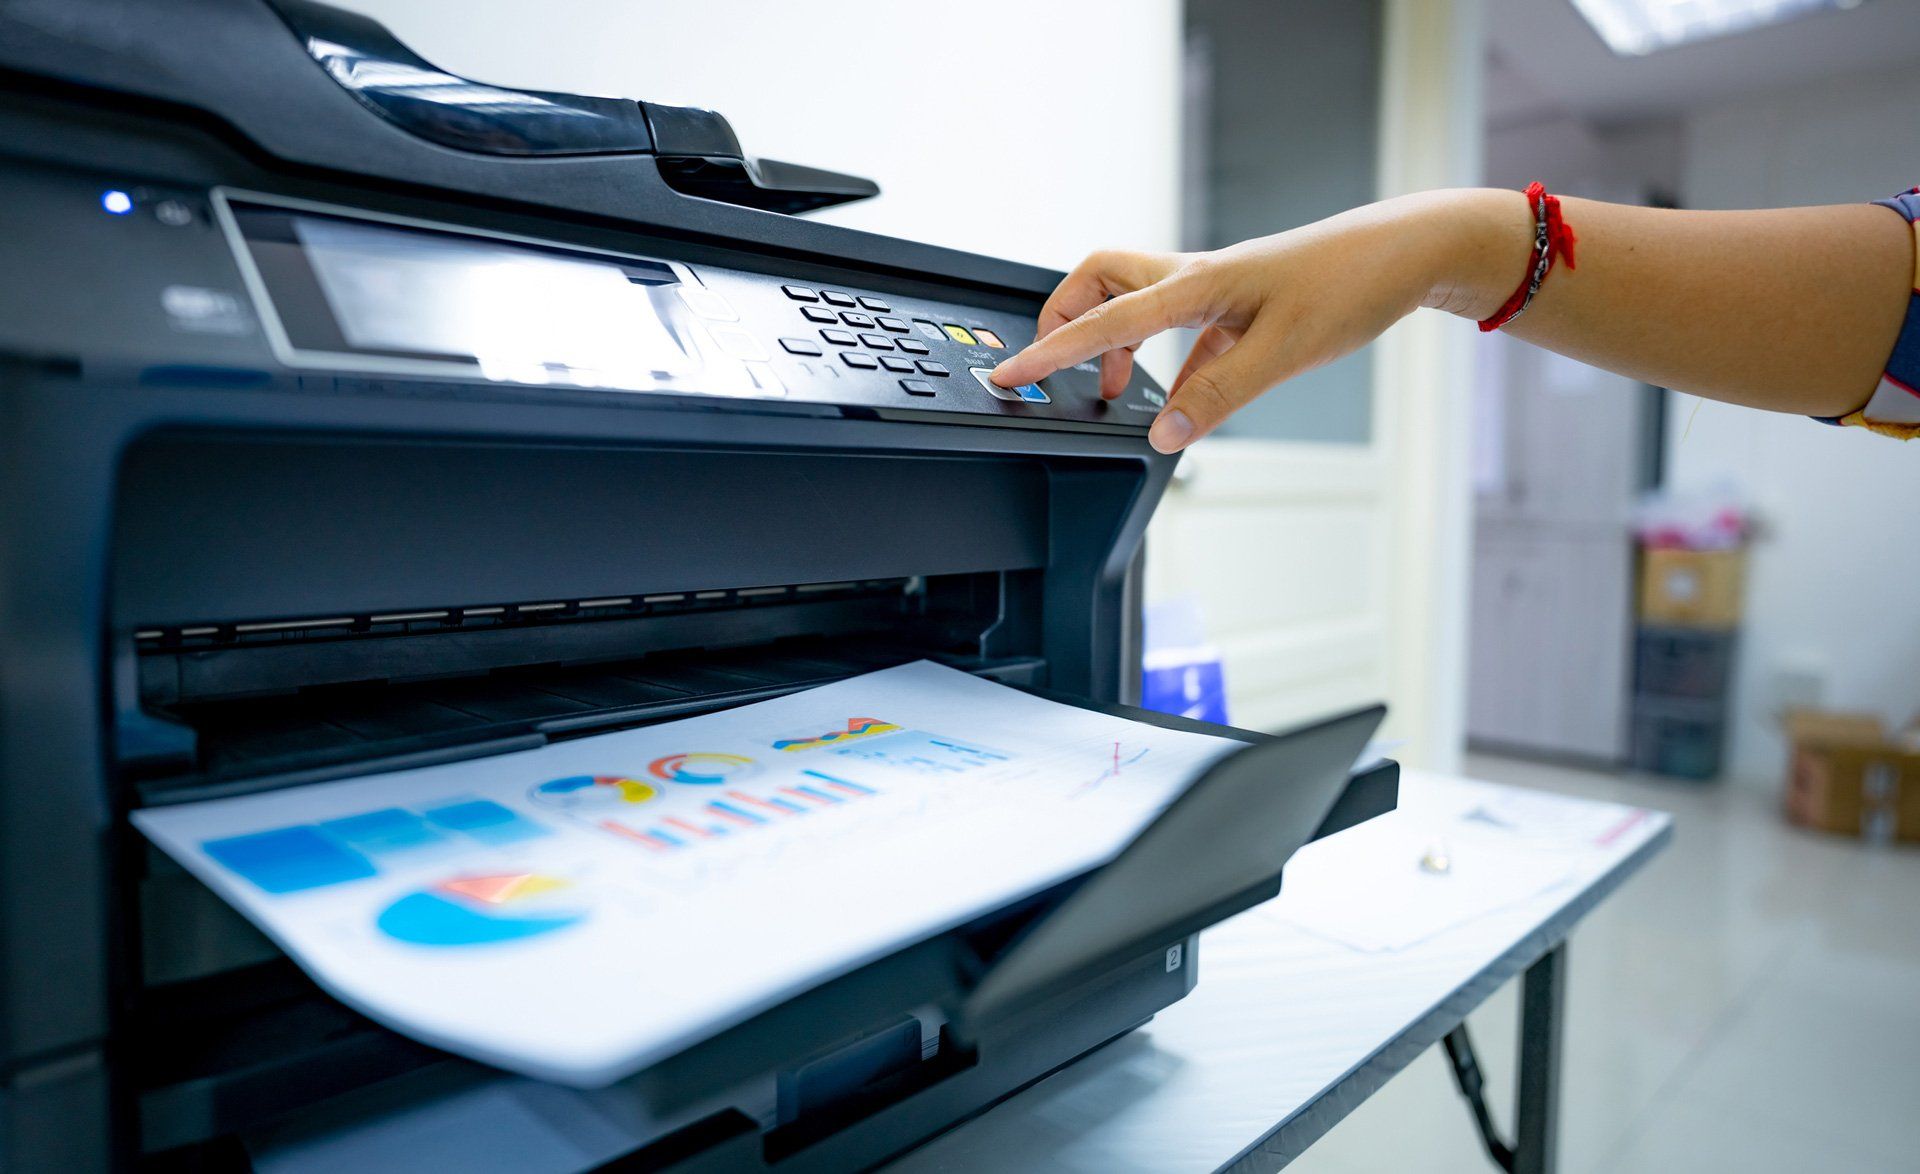 Office Worker Prints Paper on Multifunction Laser Printer | Mount Druitt, Nsw | Terry’s Mt Druitt Printing Service